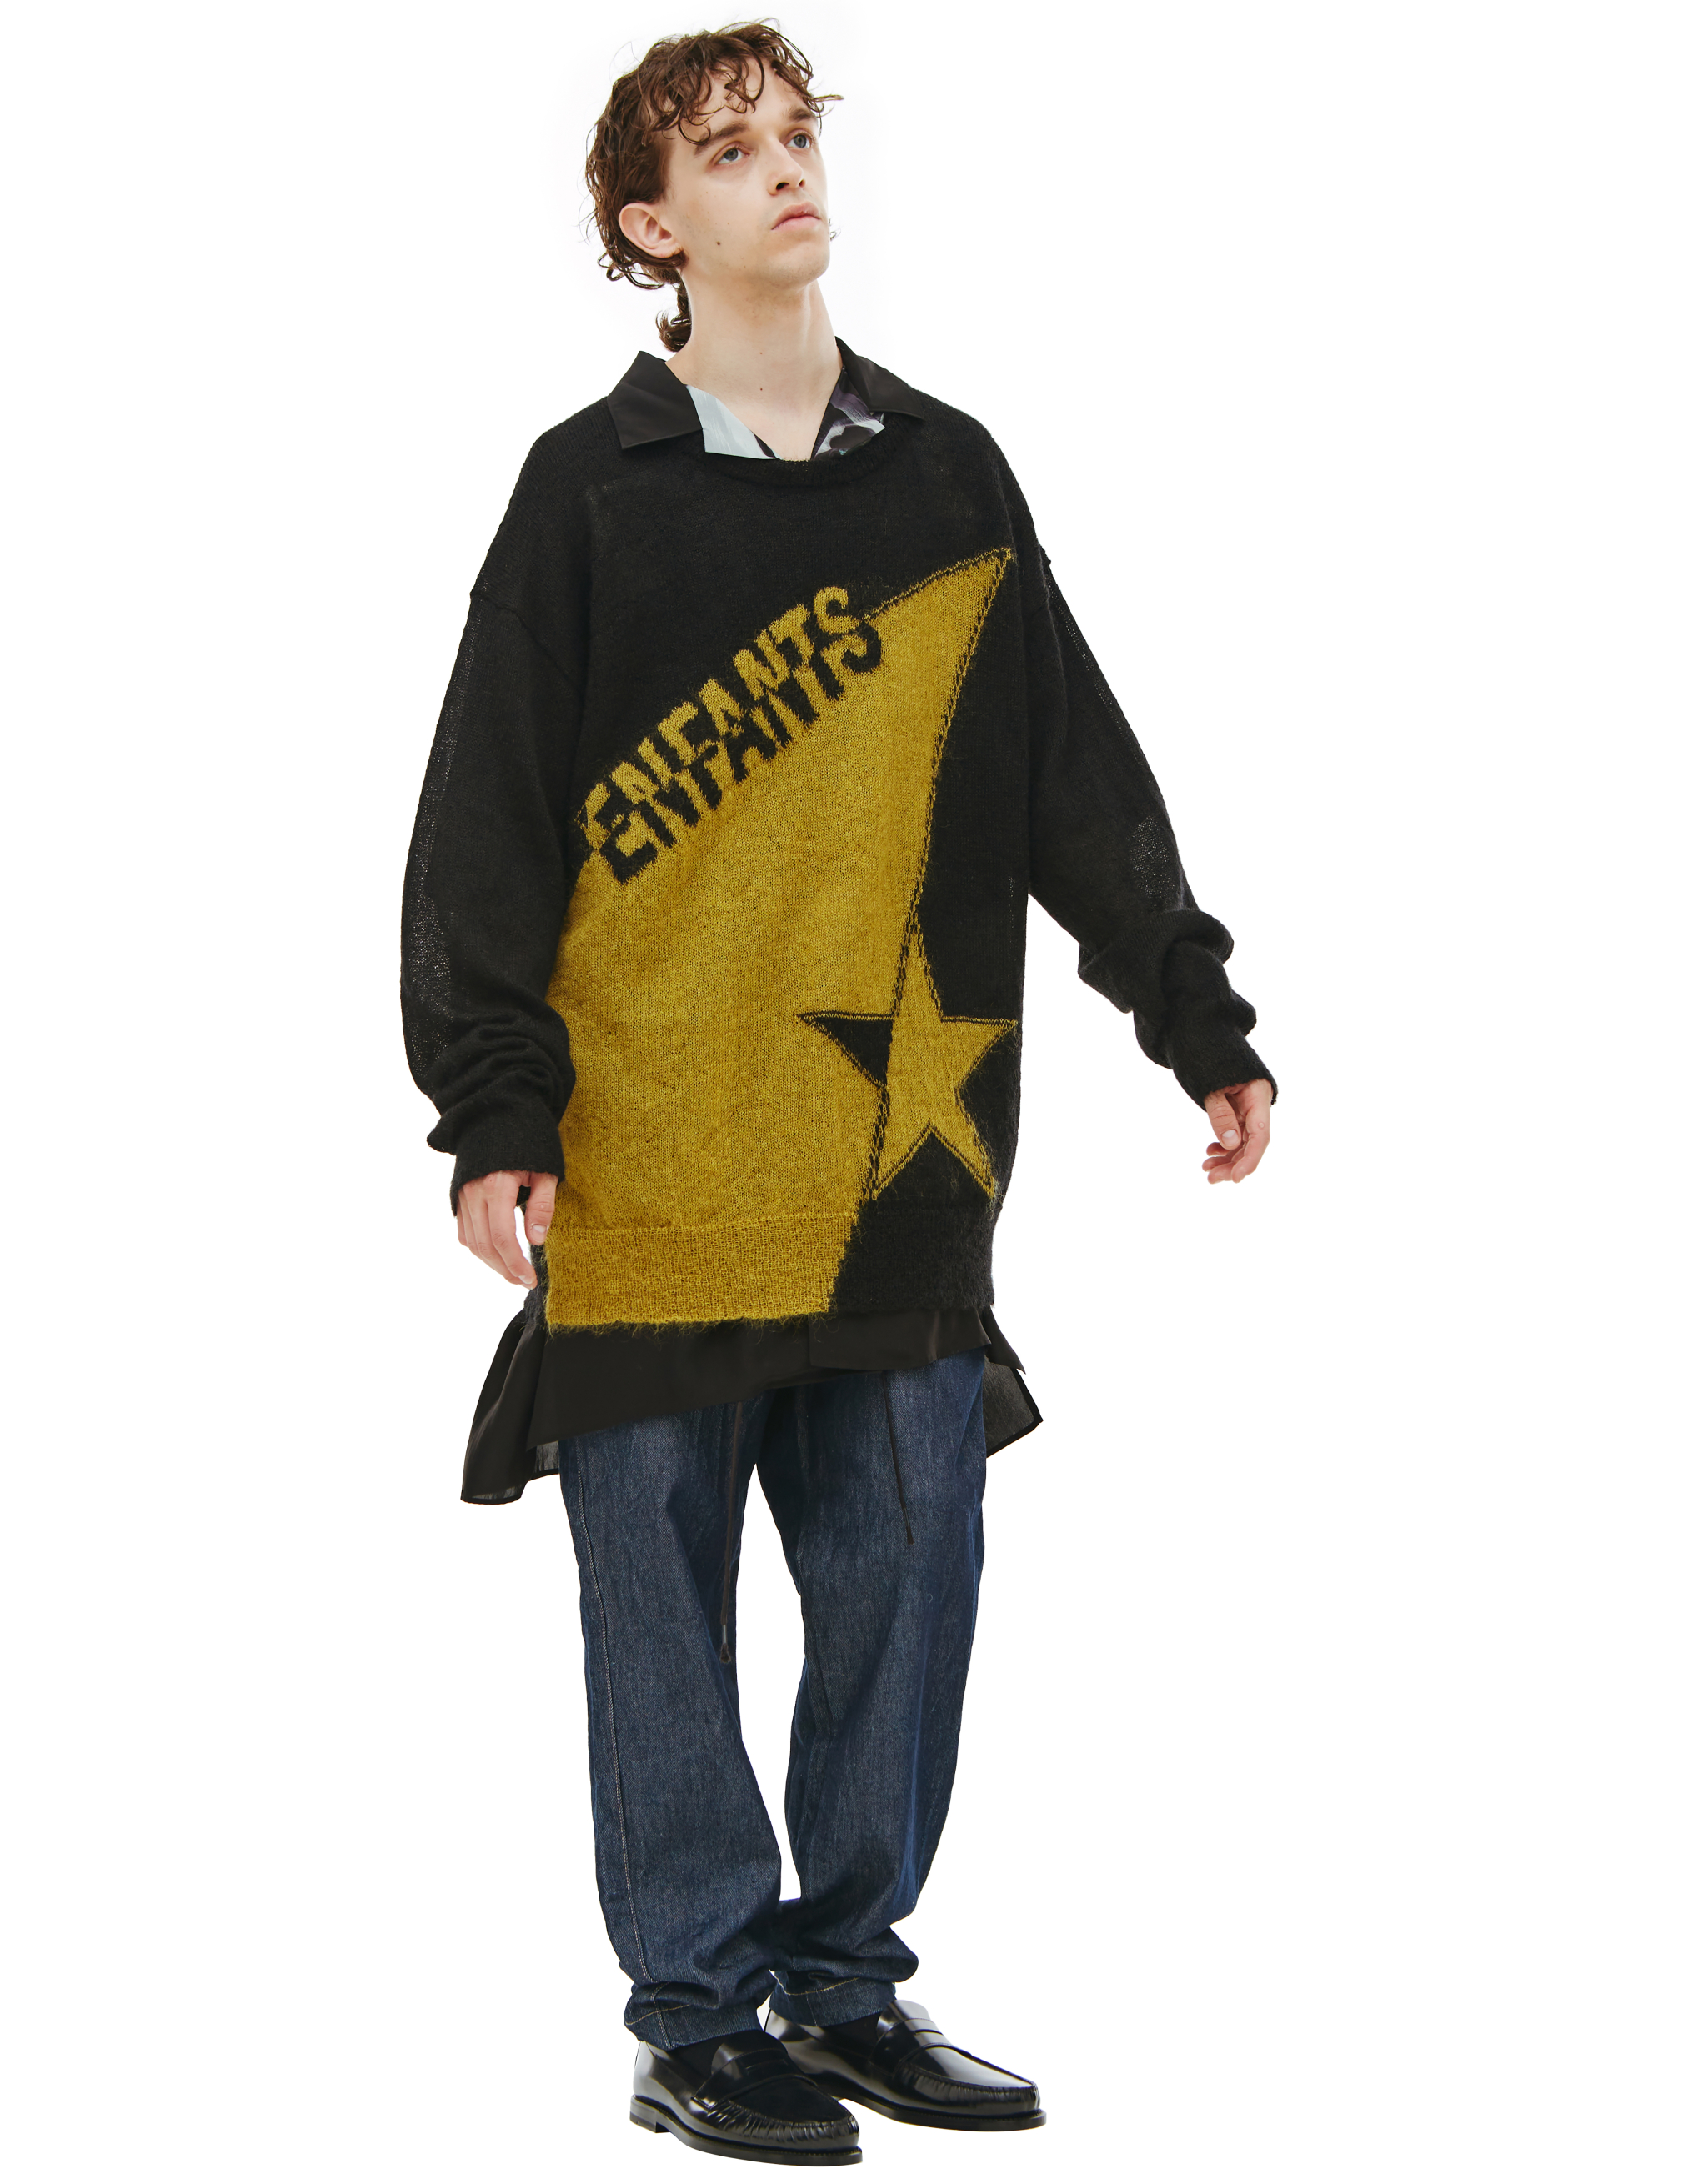 Оверсайз свитер с логотипом - Enfants Riches Deprimes 080/162